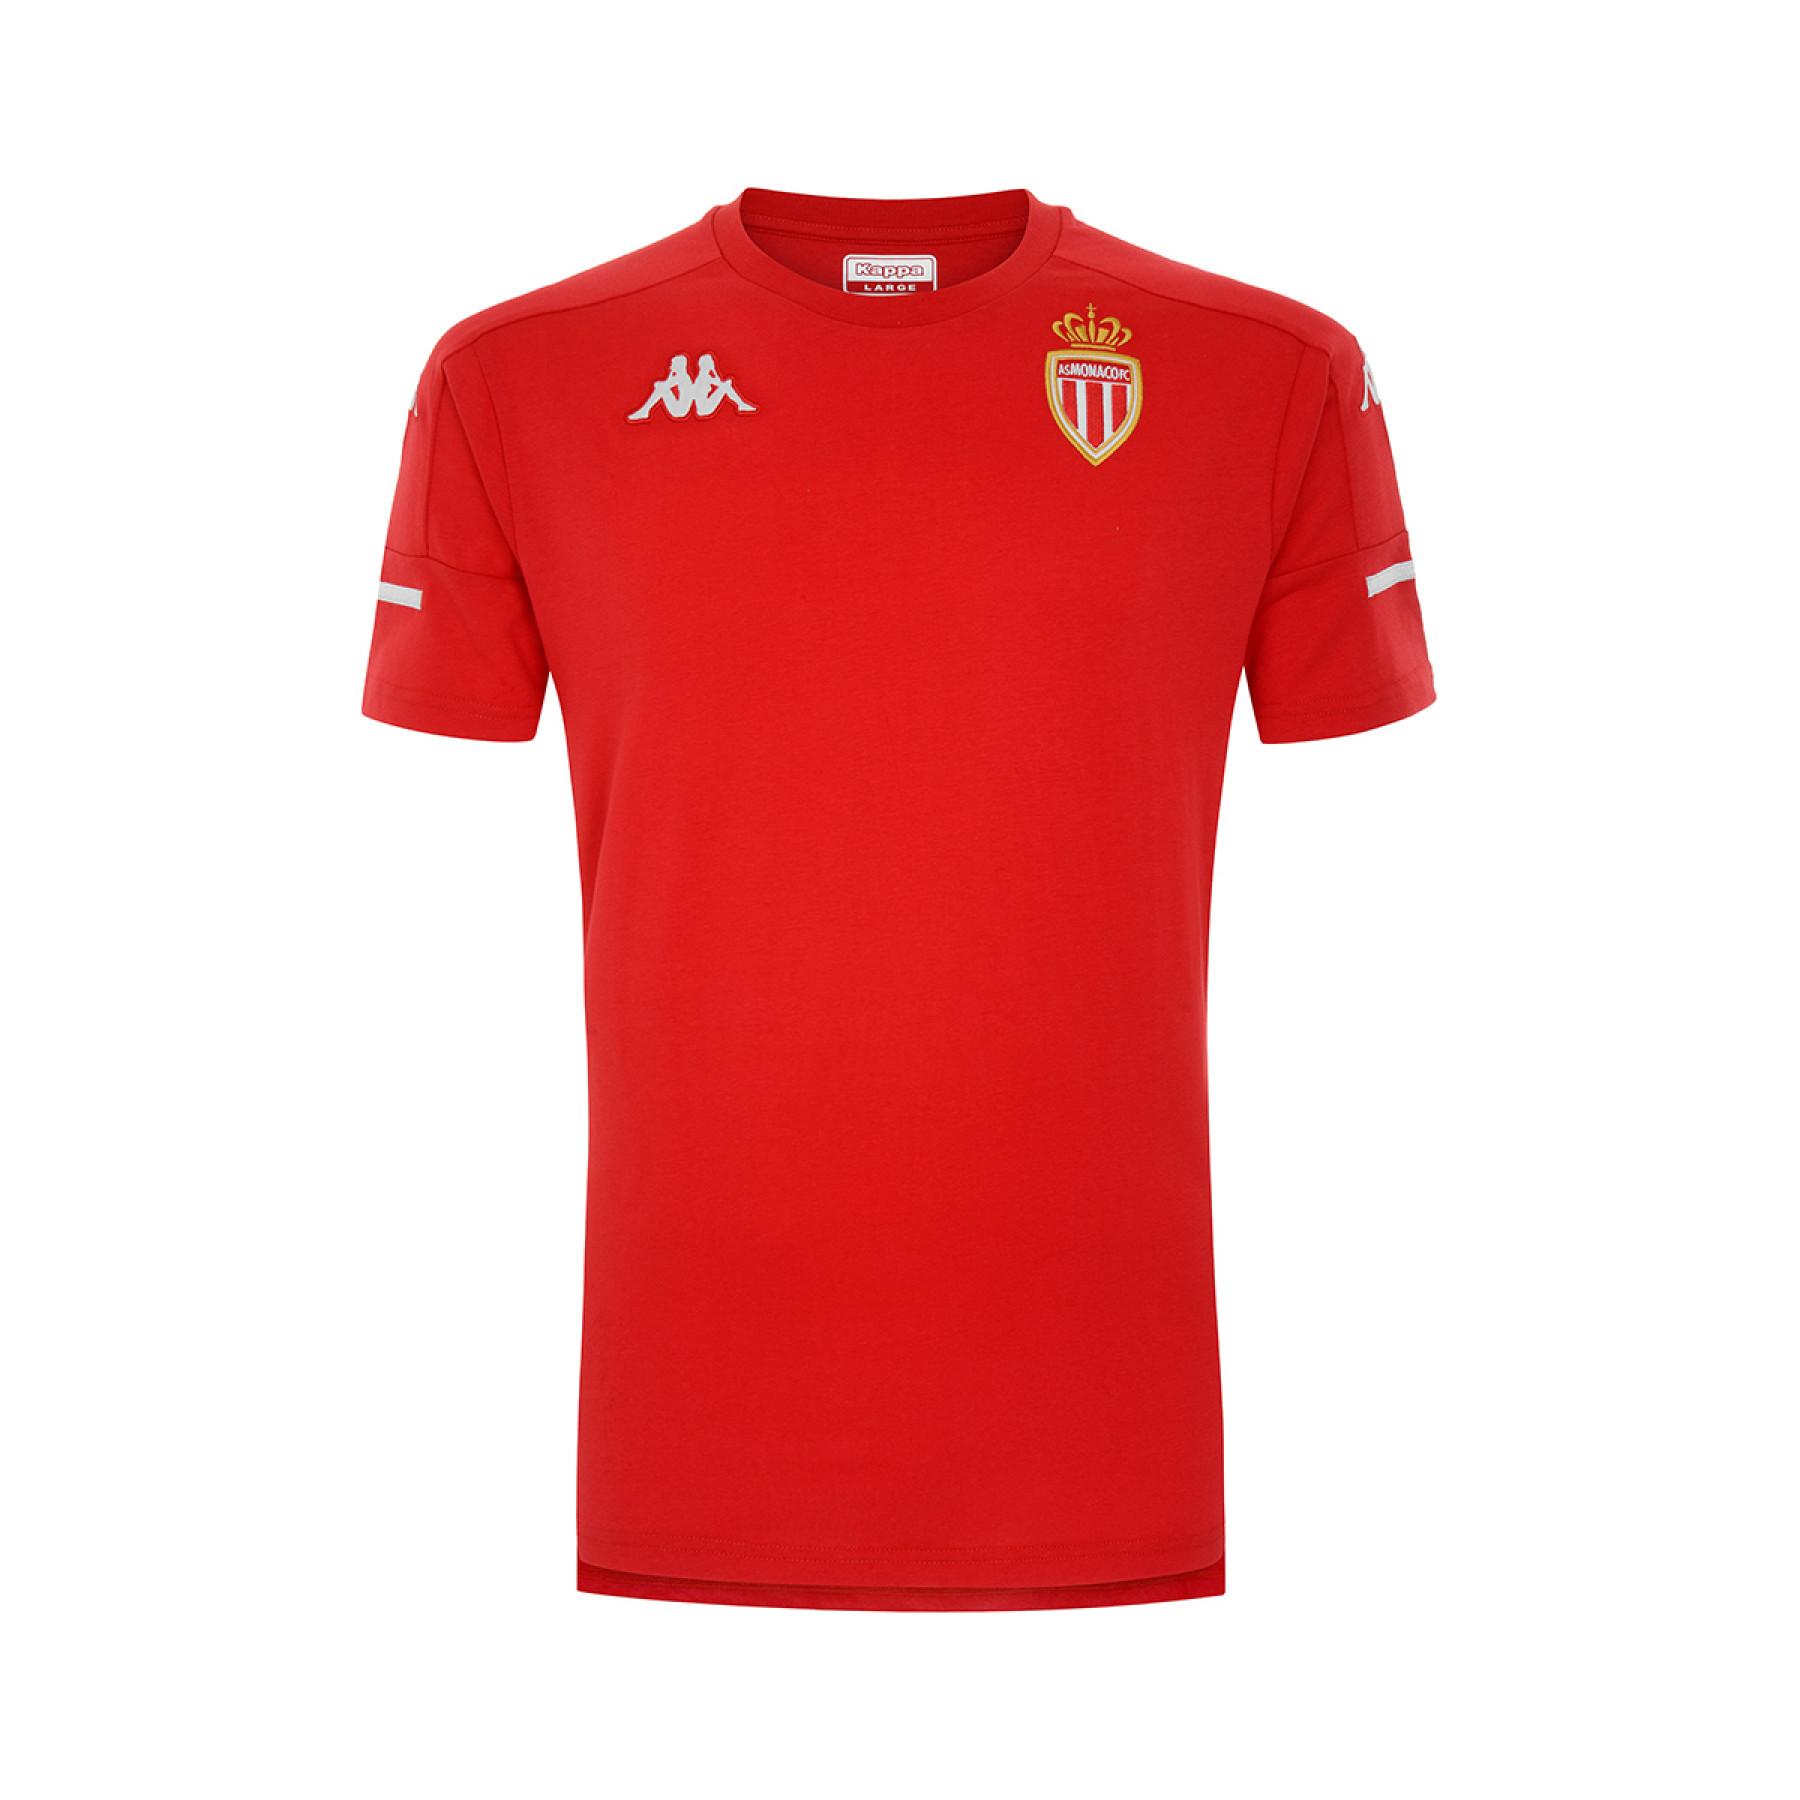 Child's T-shirt AS Monaco 2020/21 ayba 4